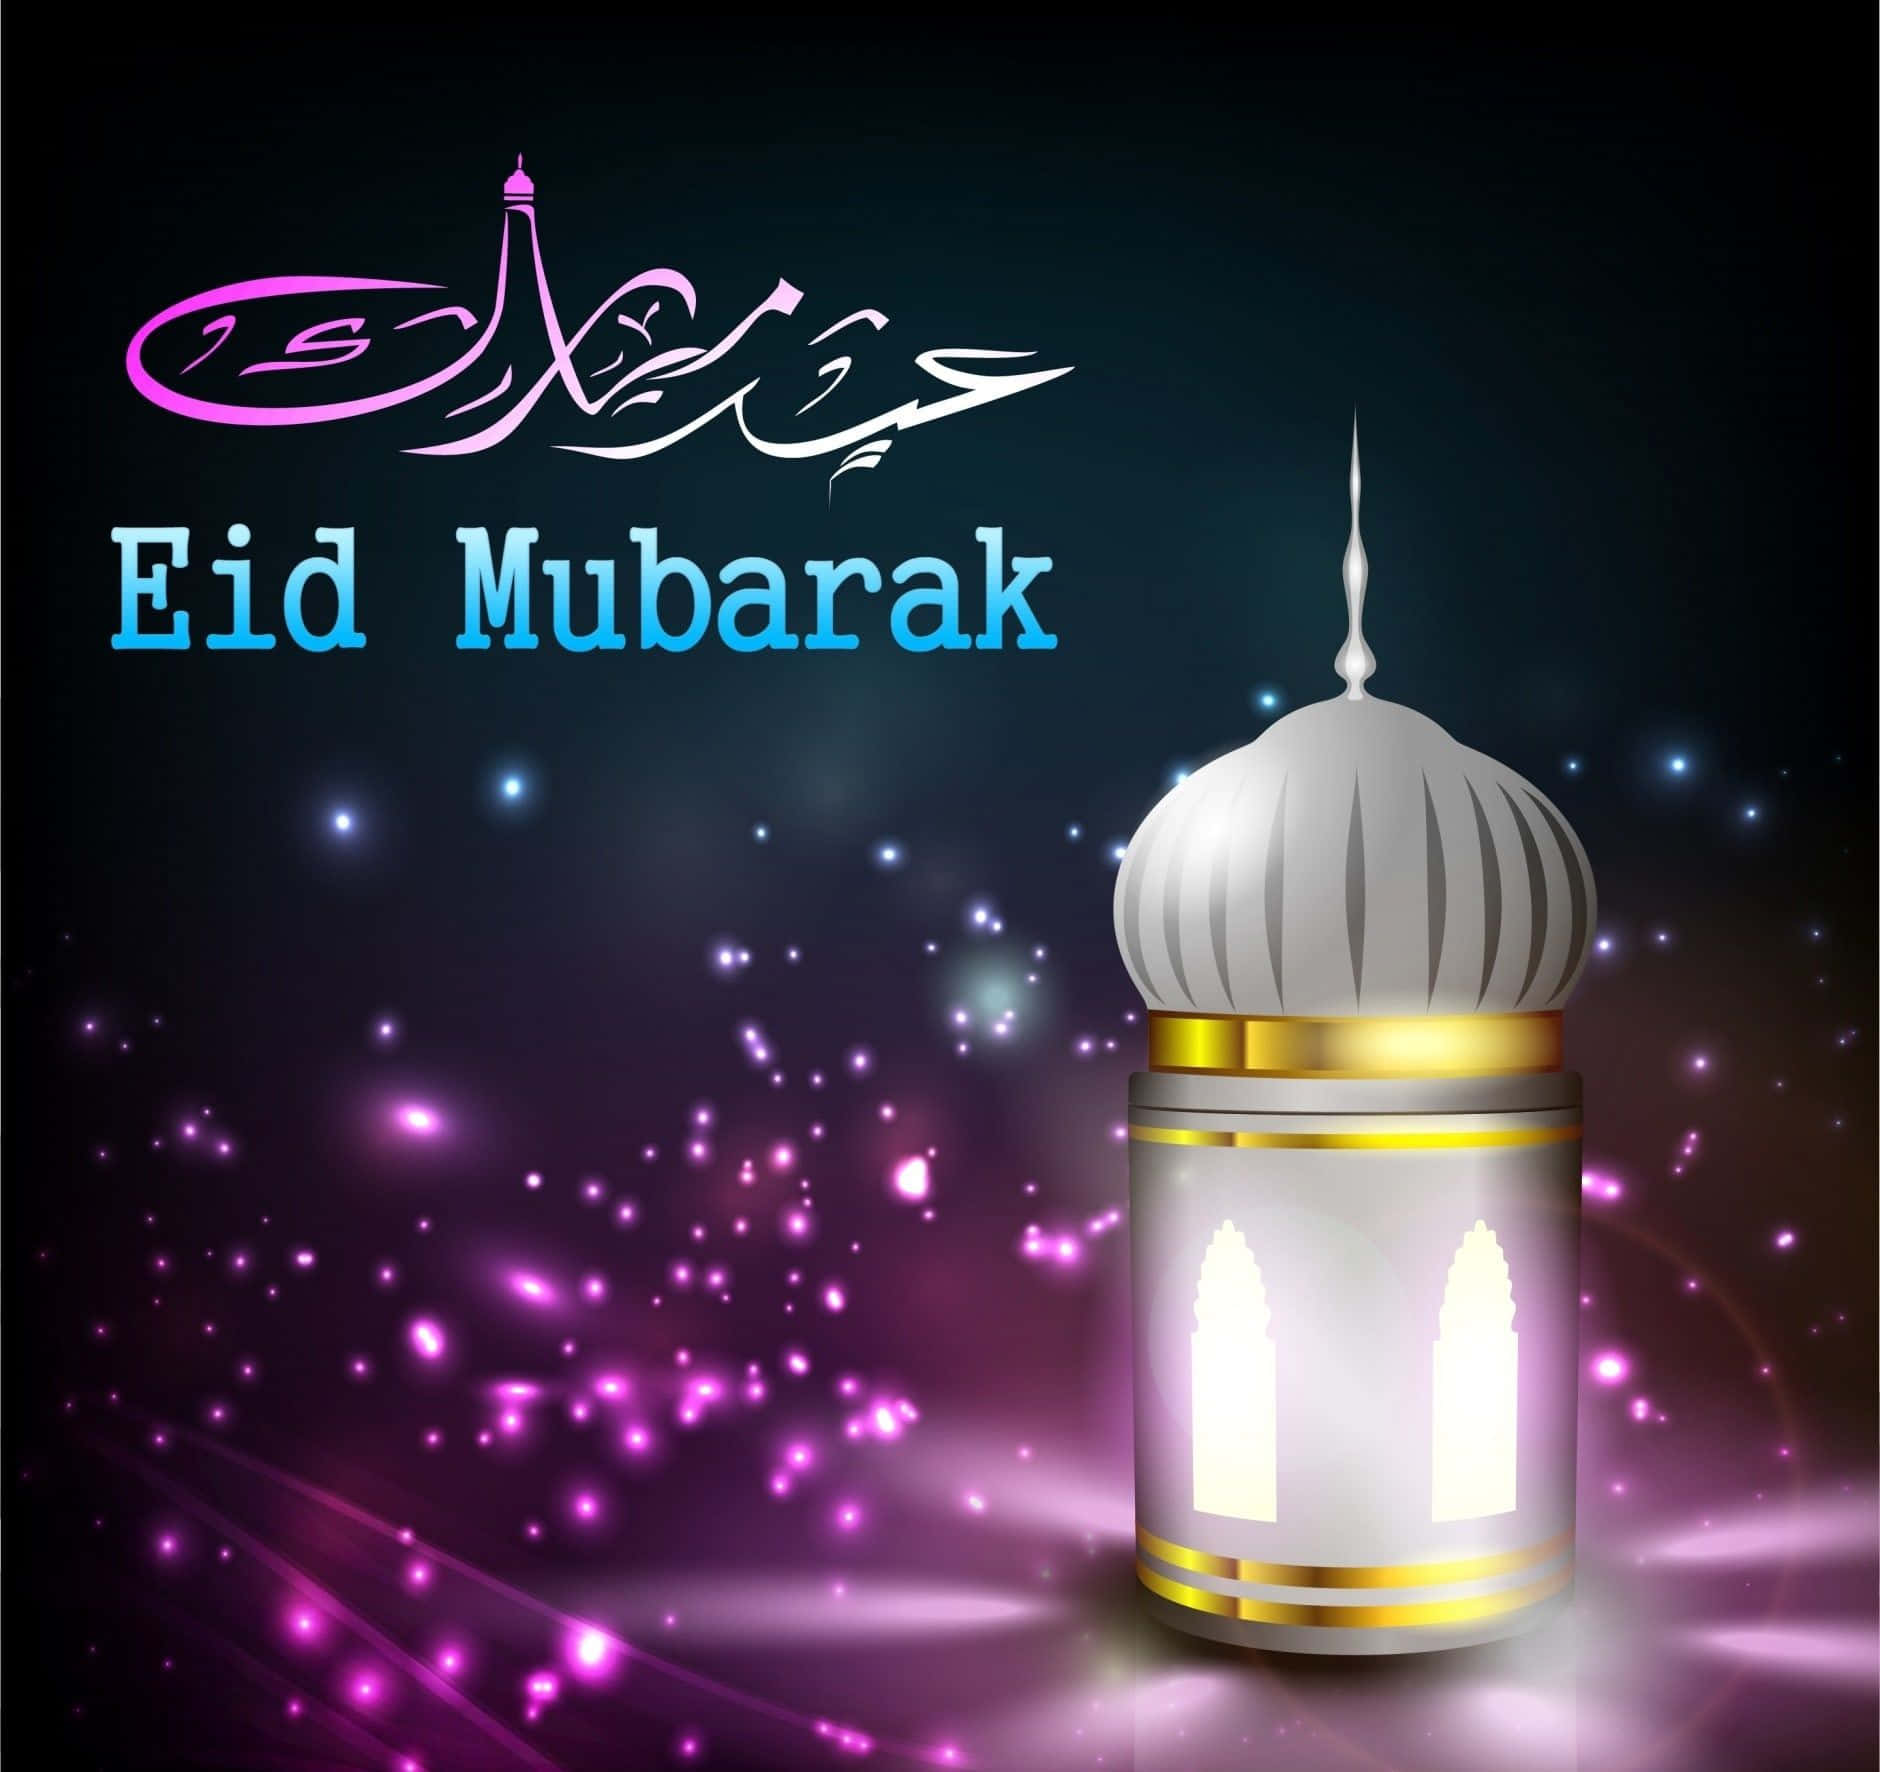 Eidmubarak Bakgrundsbilder Och Bilder